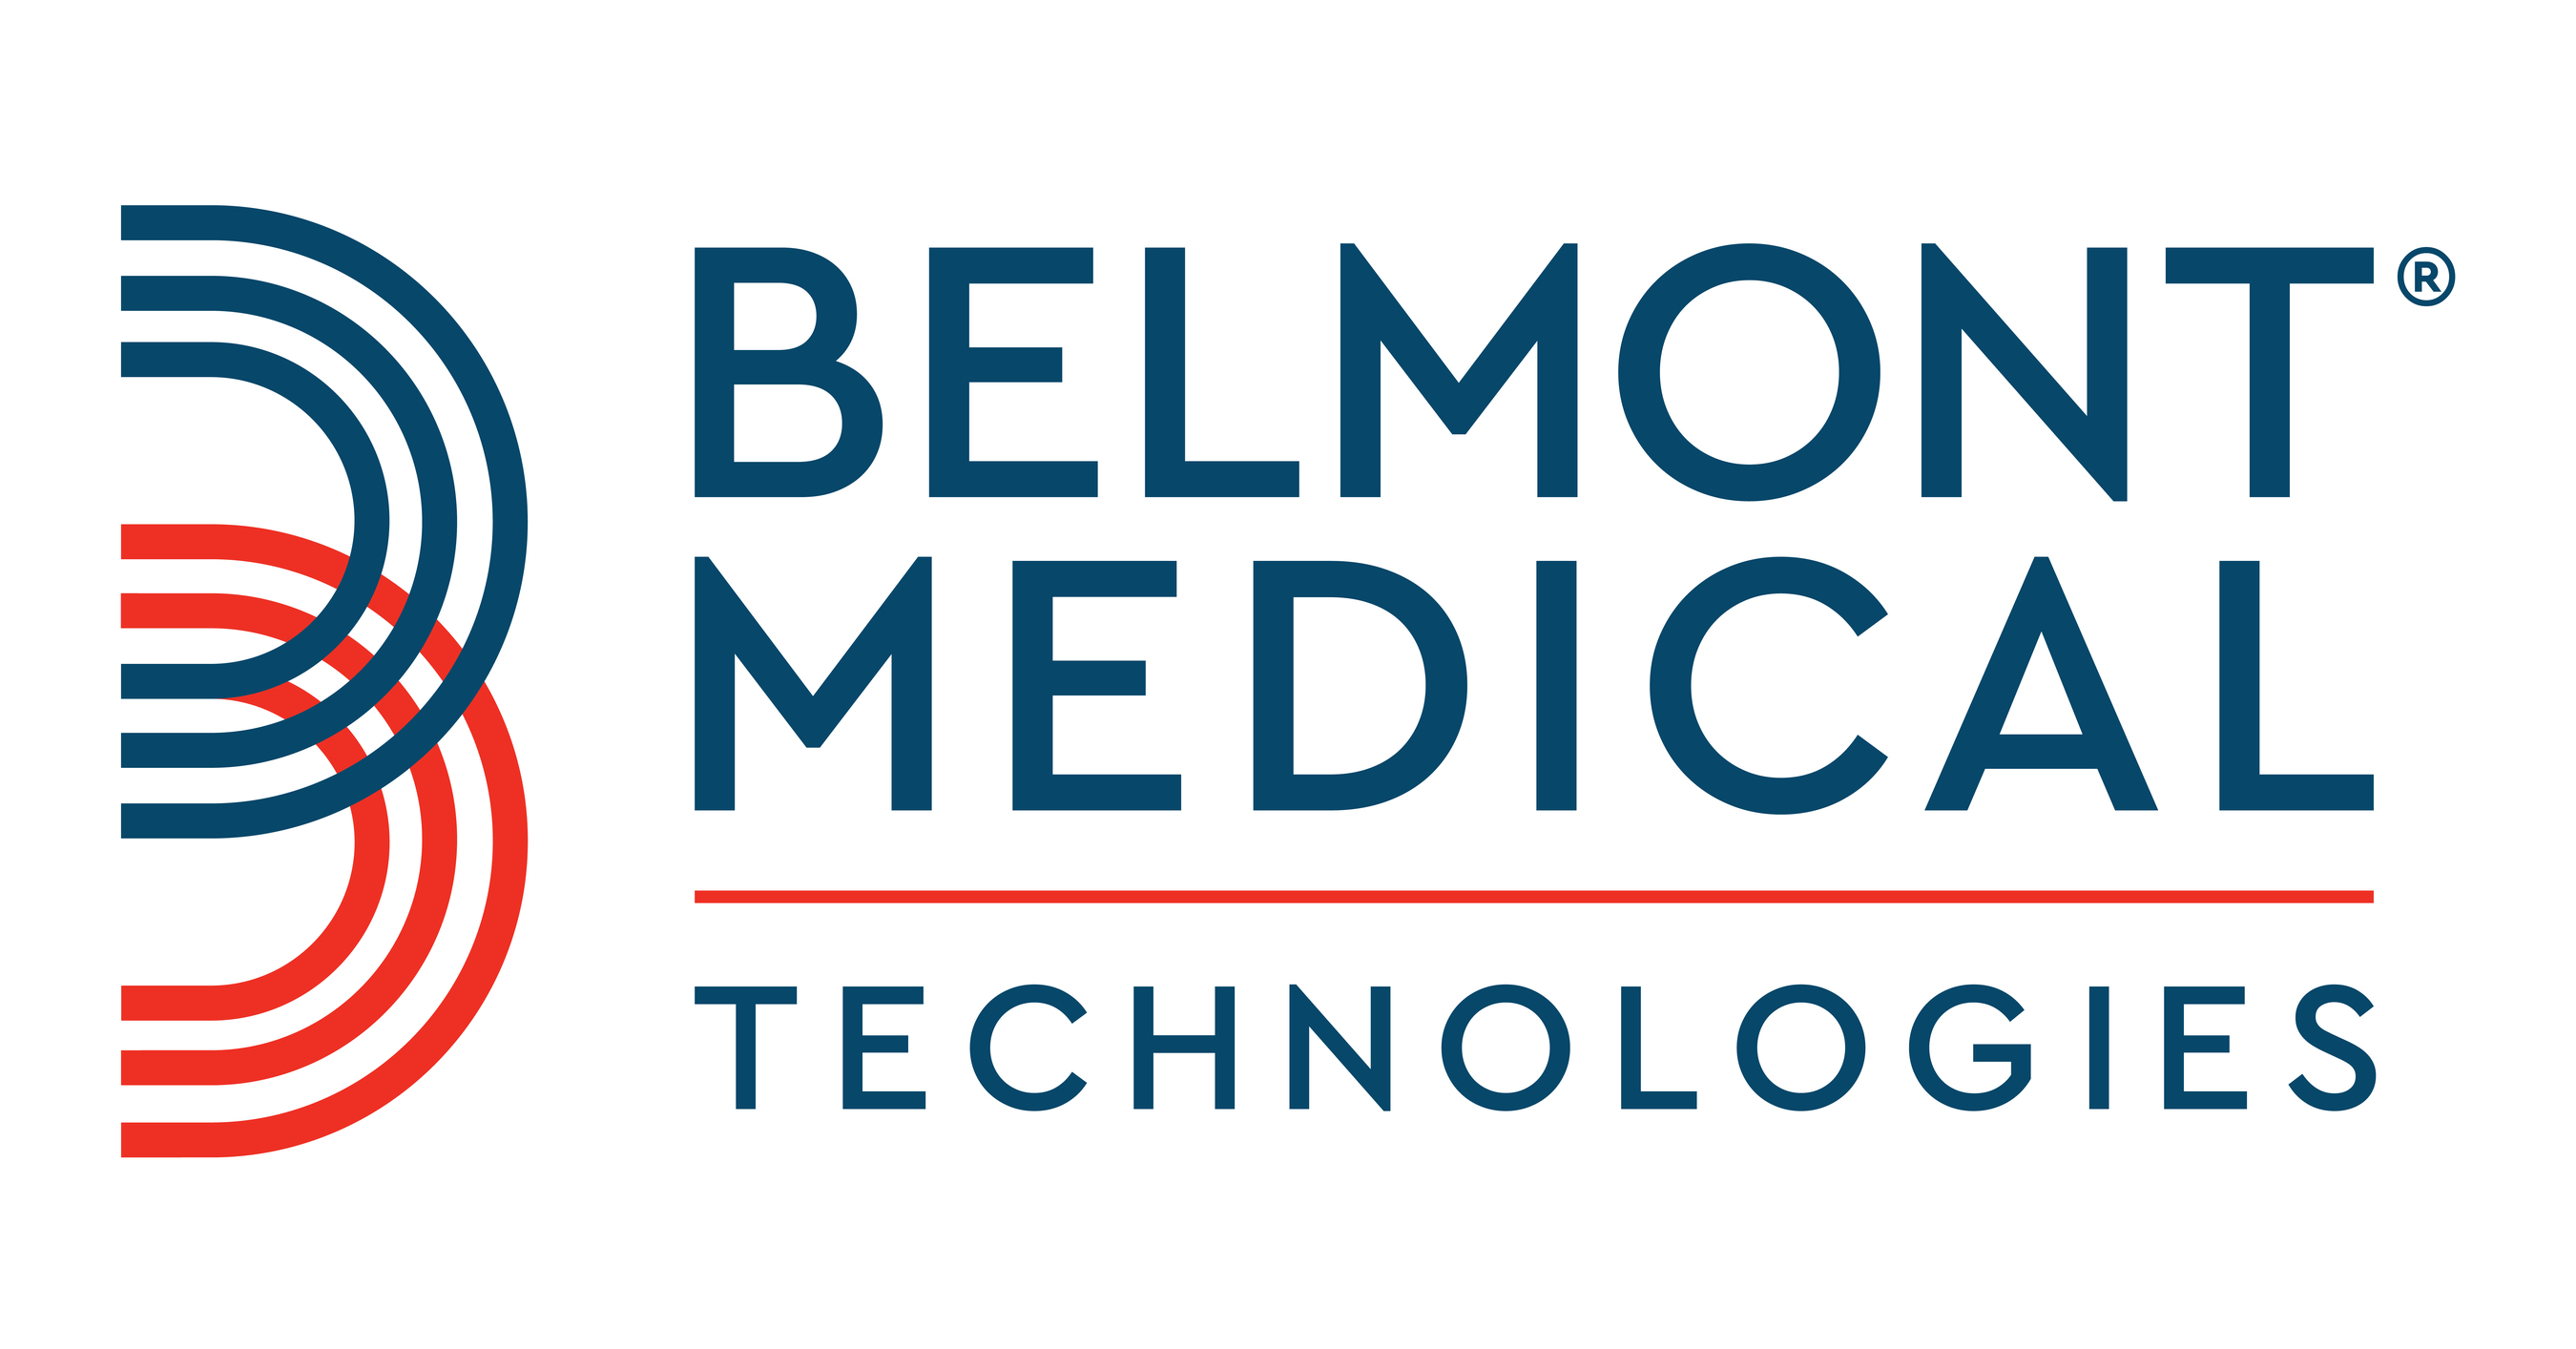 Belmond hotels chain logo editorial stock photo. Image of